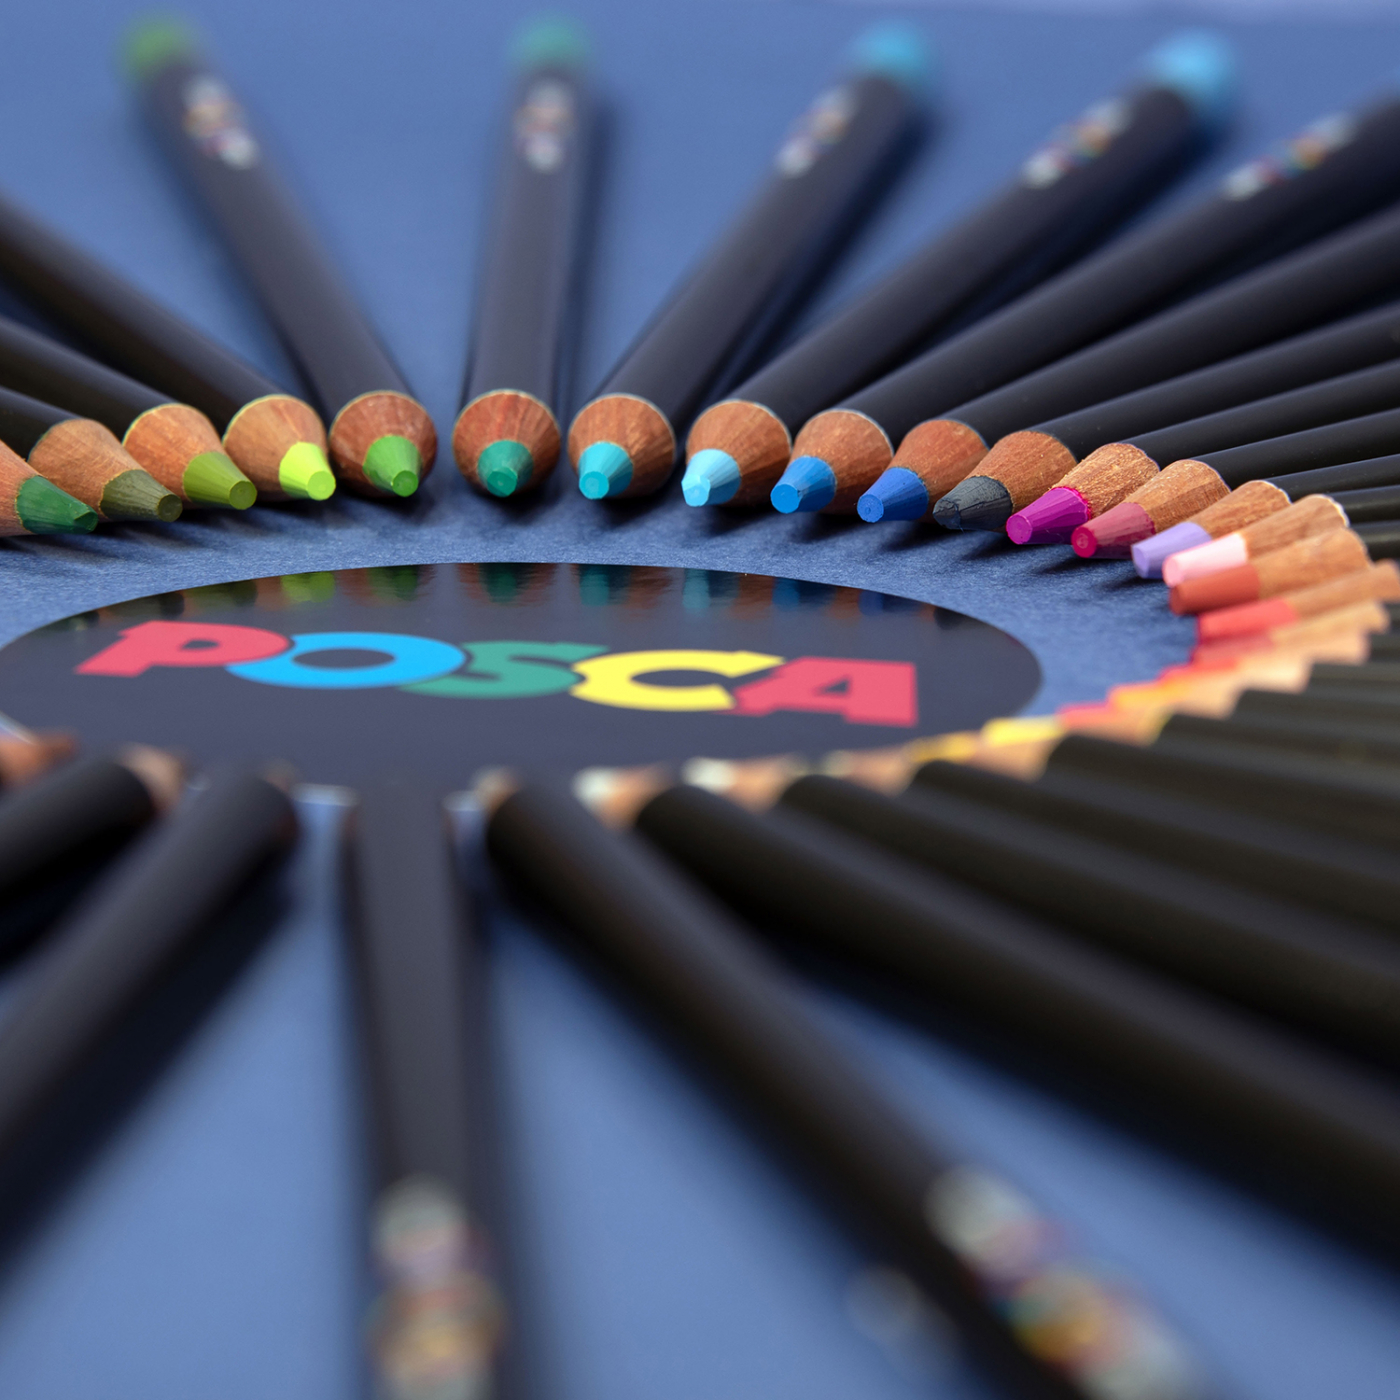 Posca Pencils – 36 colors set - Live in Colors